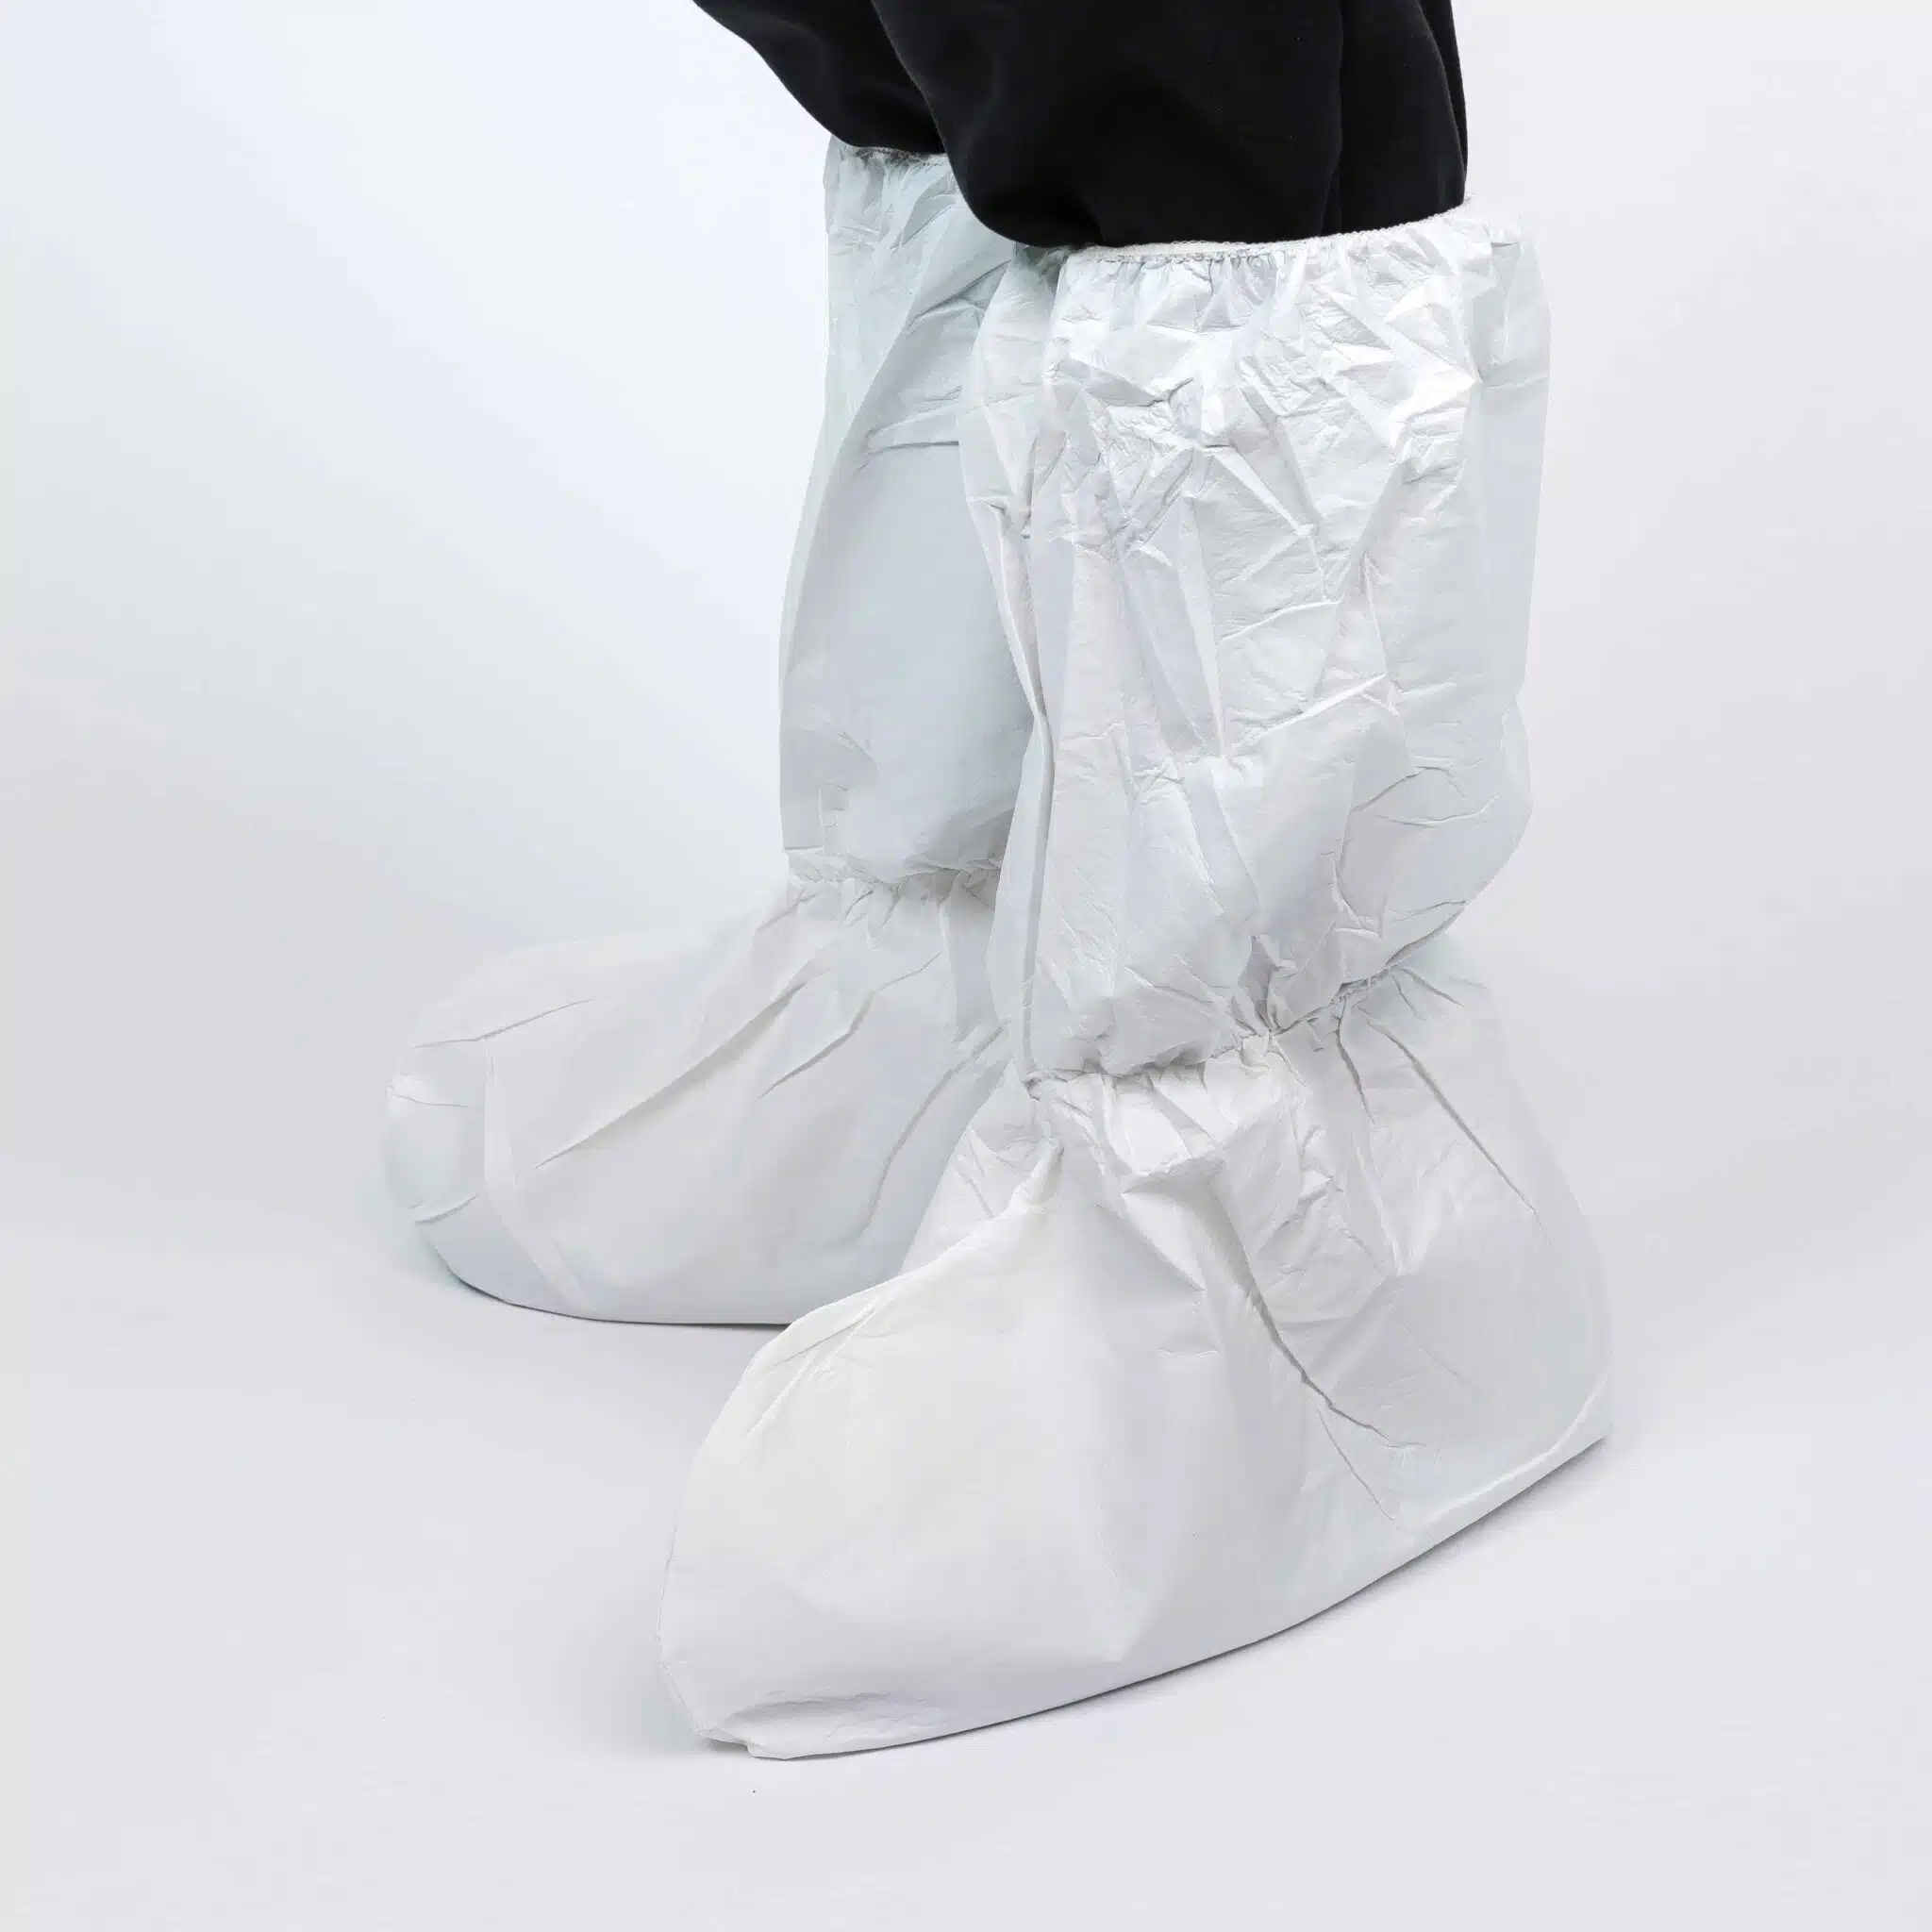 Buy Wholesale China Protective Boot Anti-slip Bottom Sleeve Cover